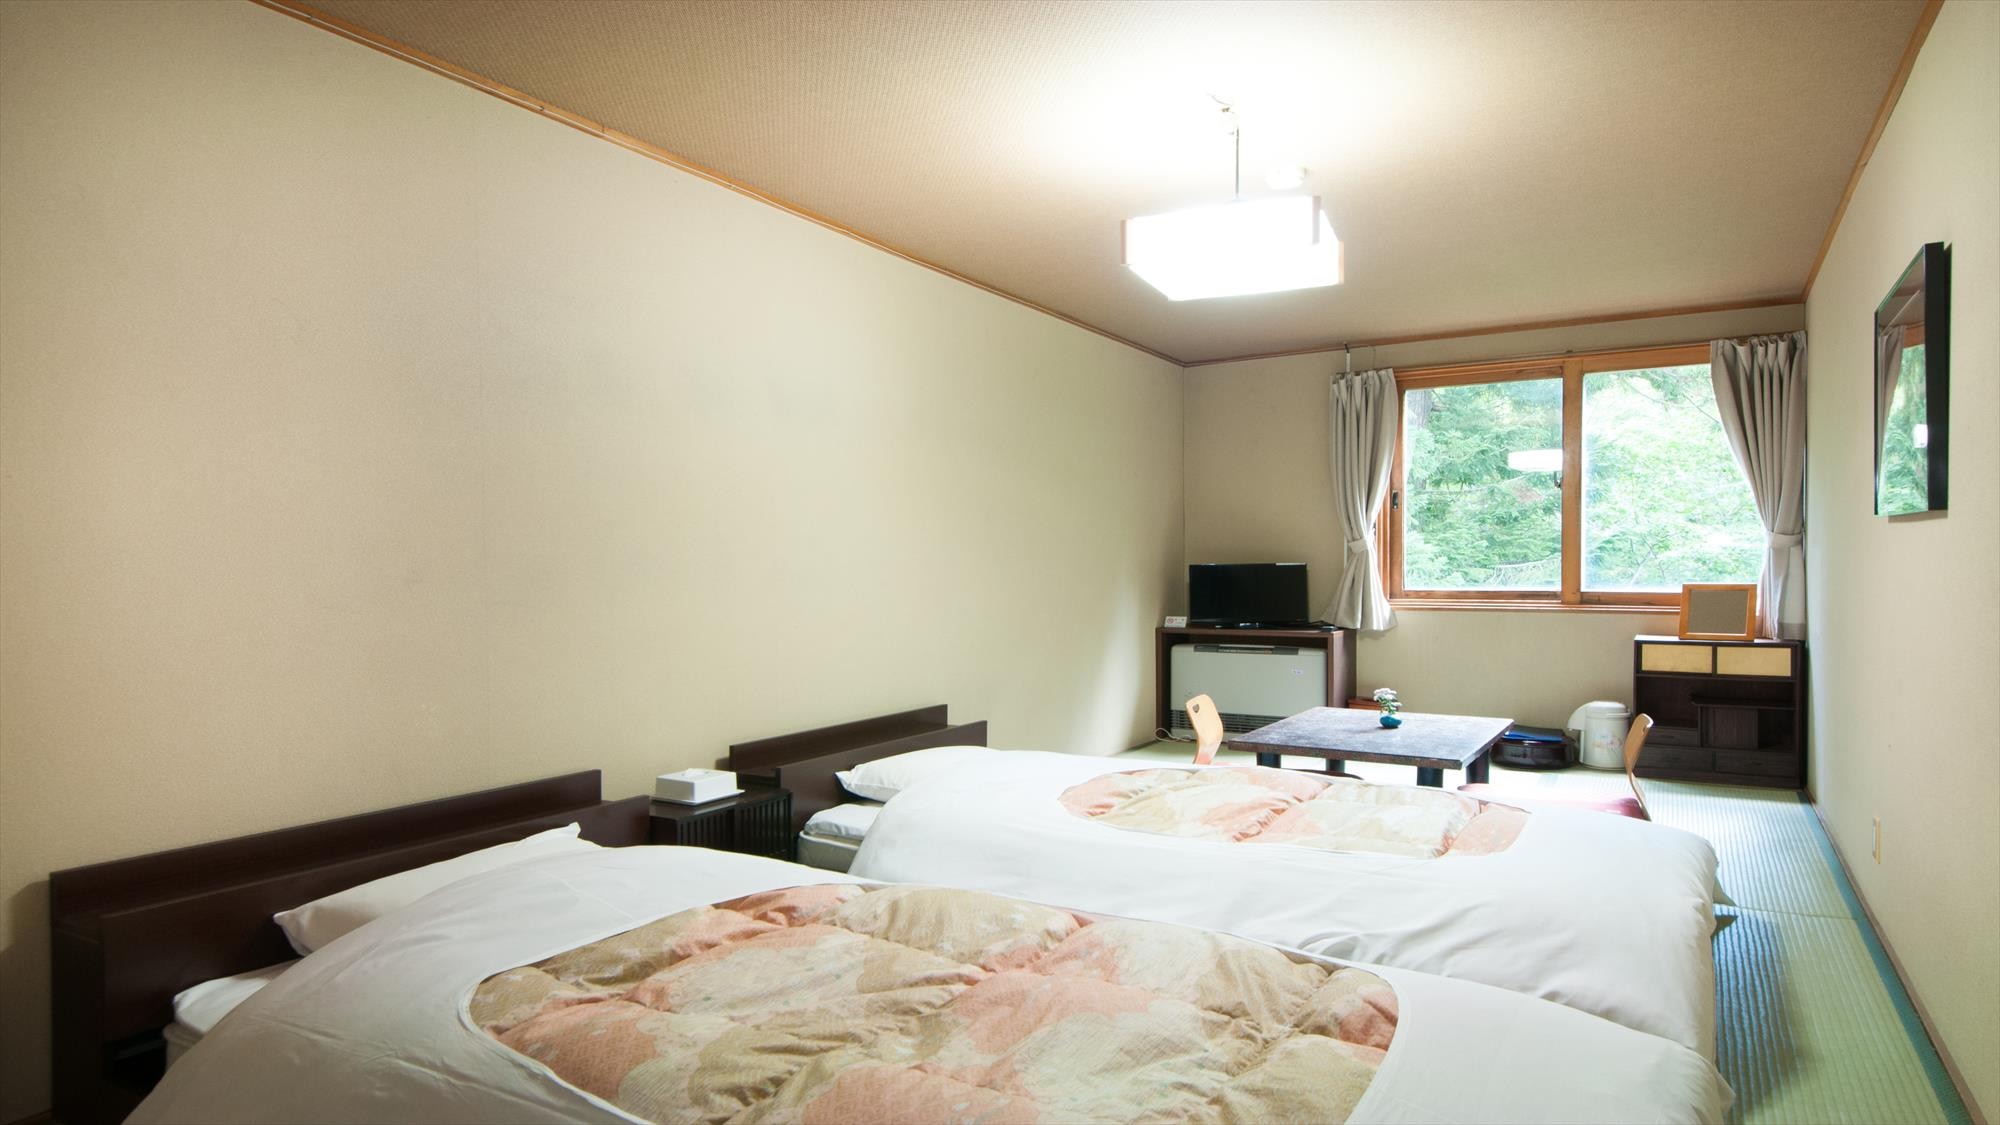 ◆ [Main Building] Japanese-style room 12 tatami mats